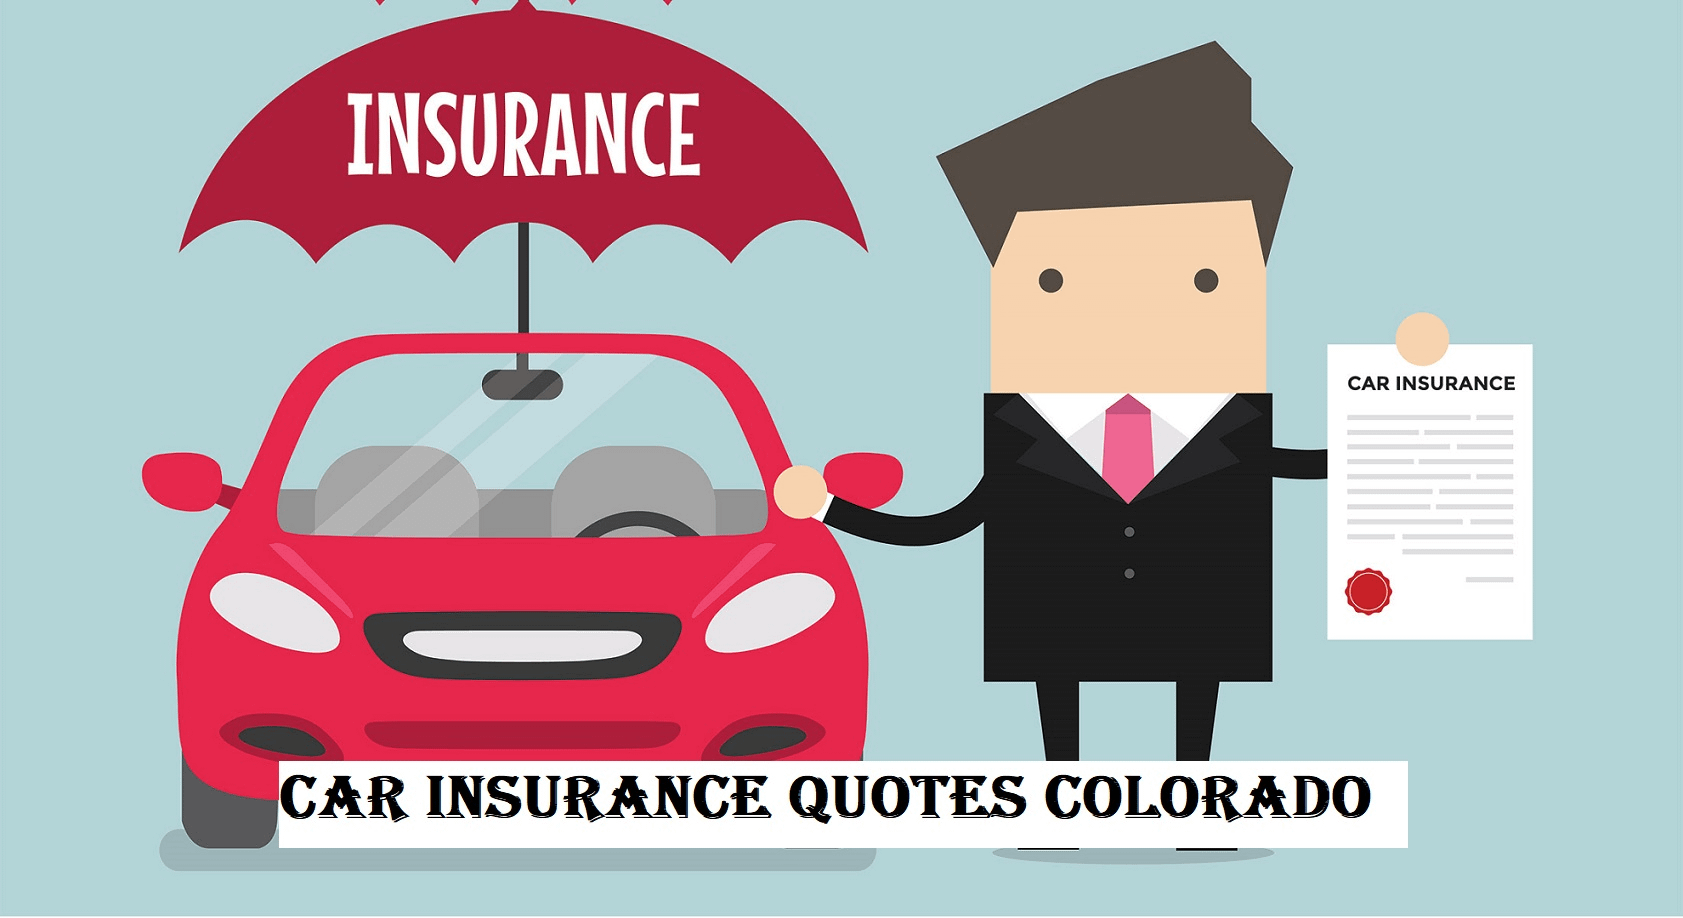 Car insurance quotes Colorado